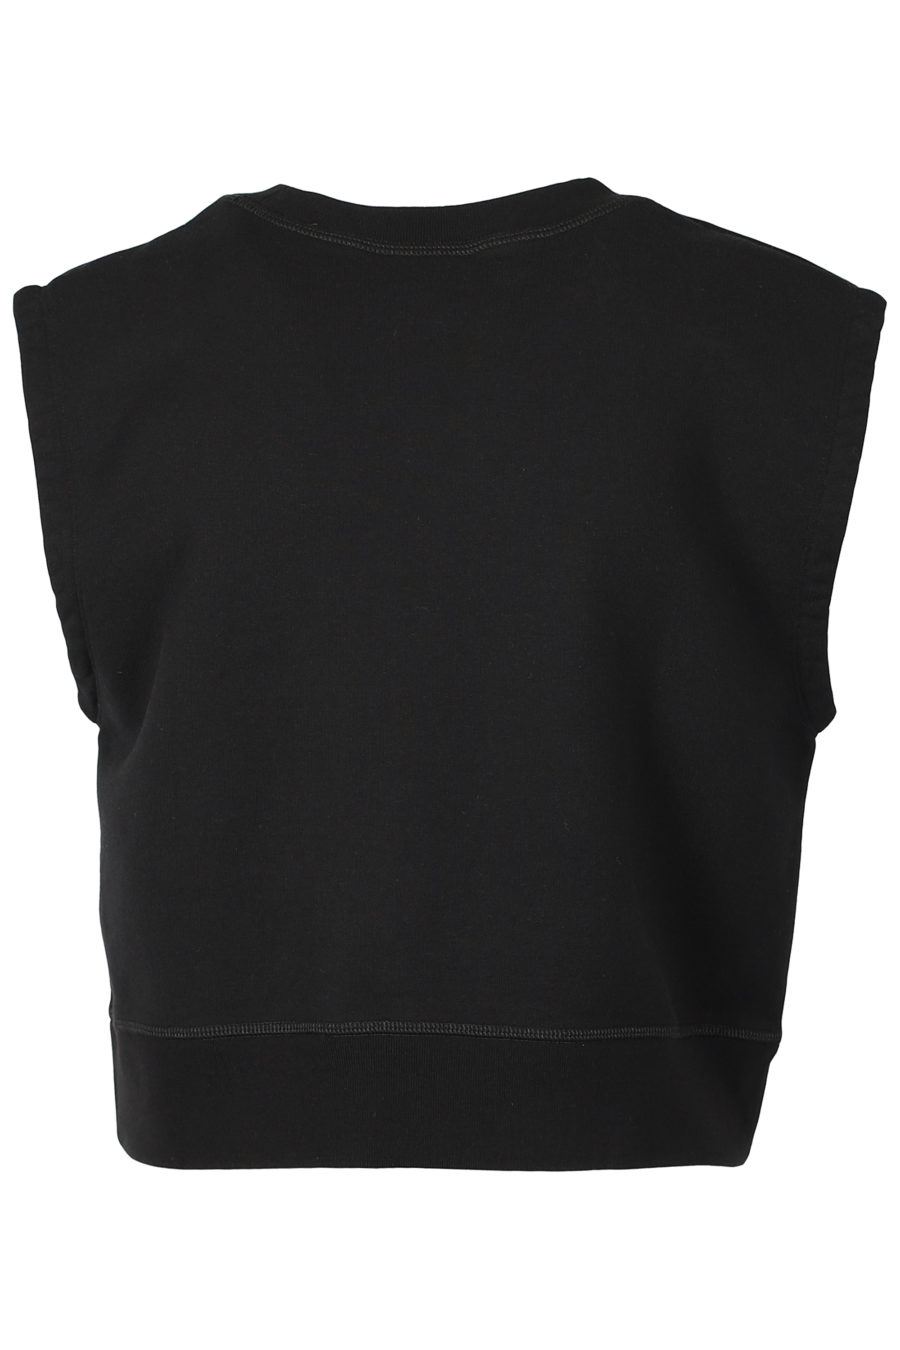 Camiseta negra sin mangas con logo engomado - IMG 3243